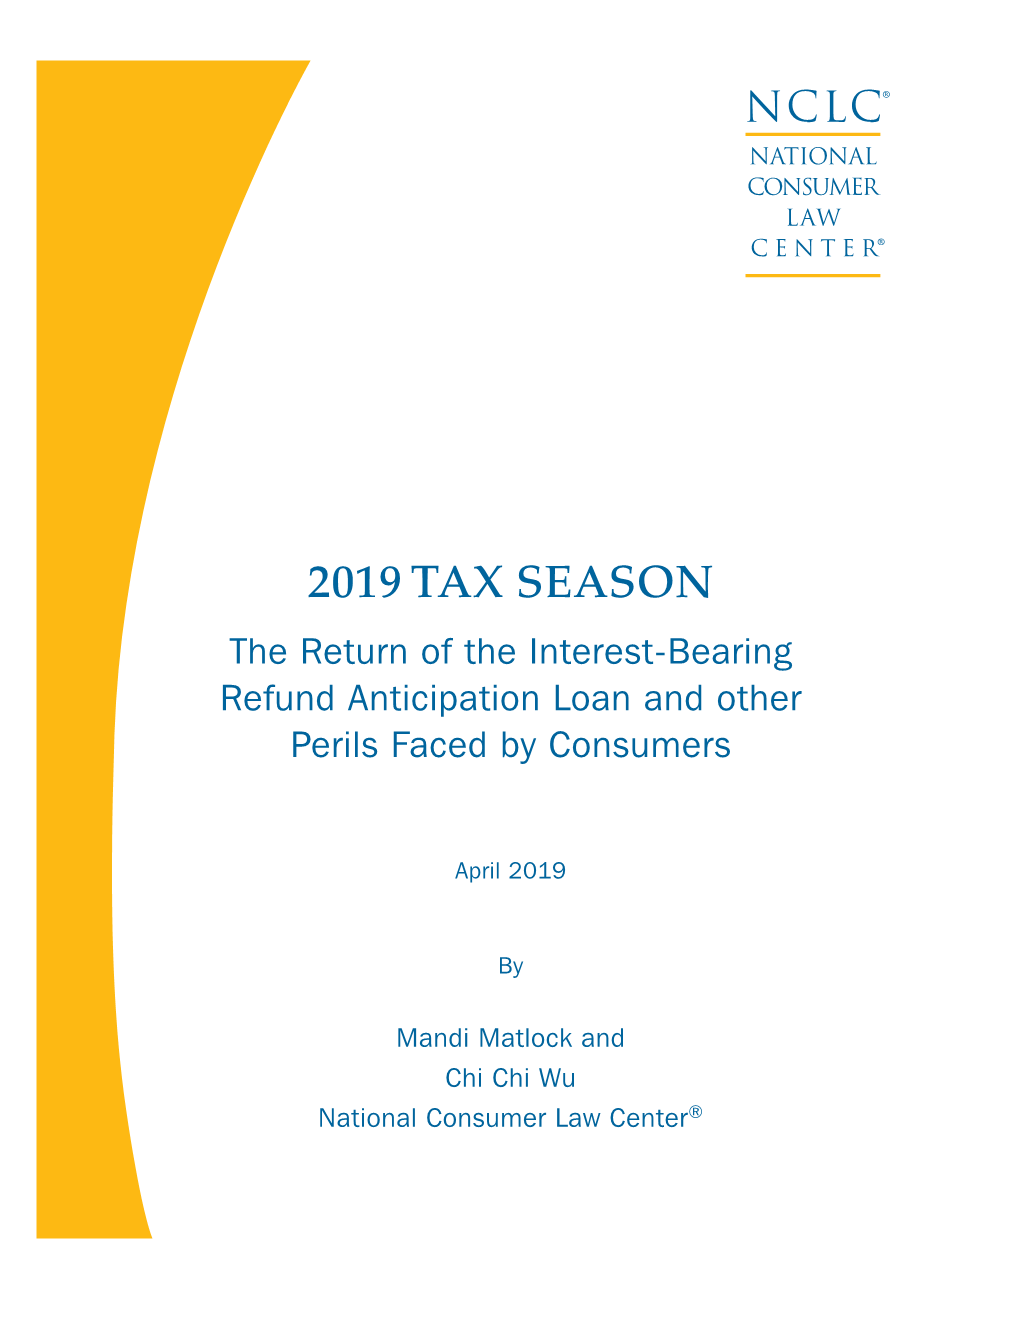 2019 Tax Season: the Return of the Interest-Bearing Refund Anticipation